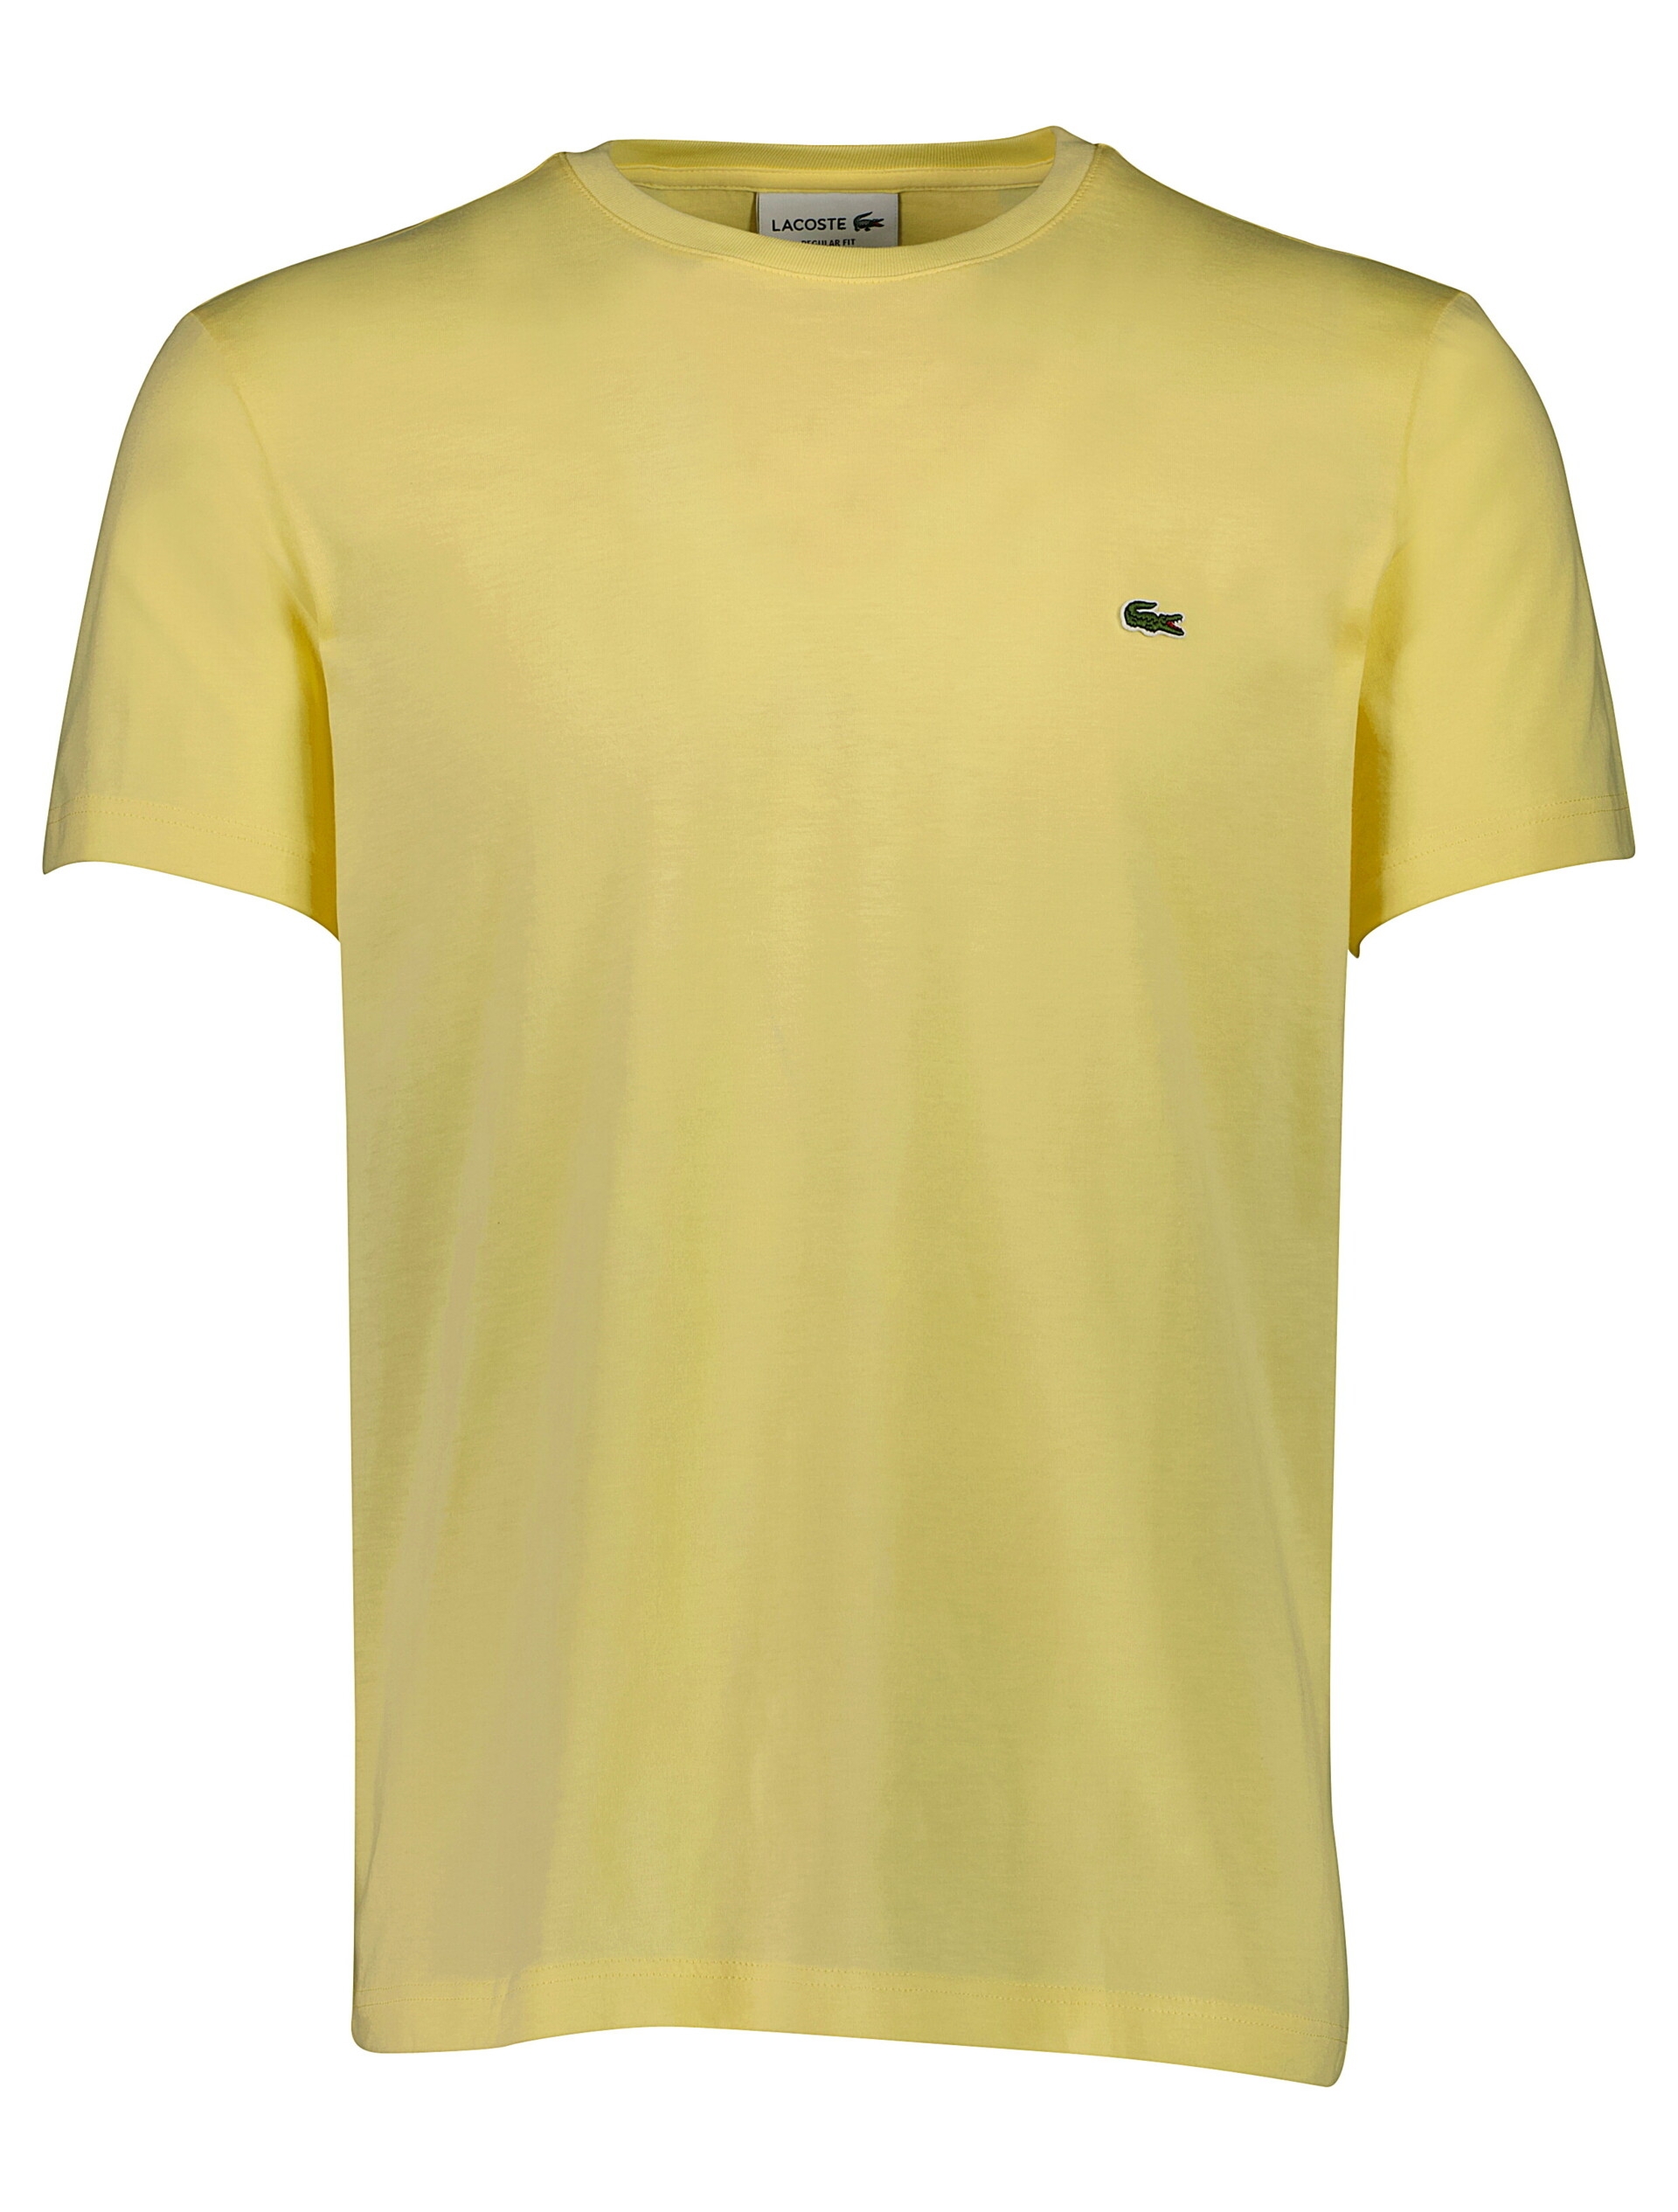 Lacoste T-shirt gul / 6xp yellow